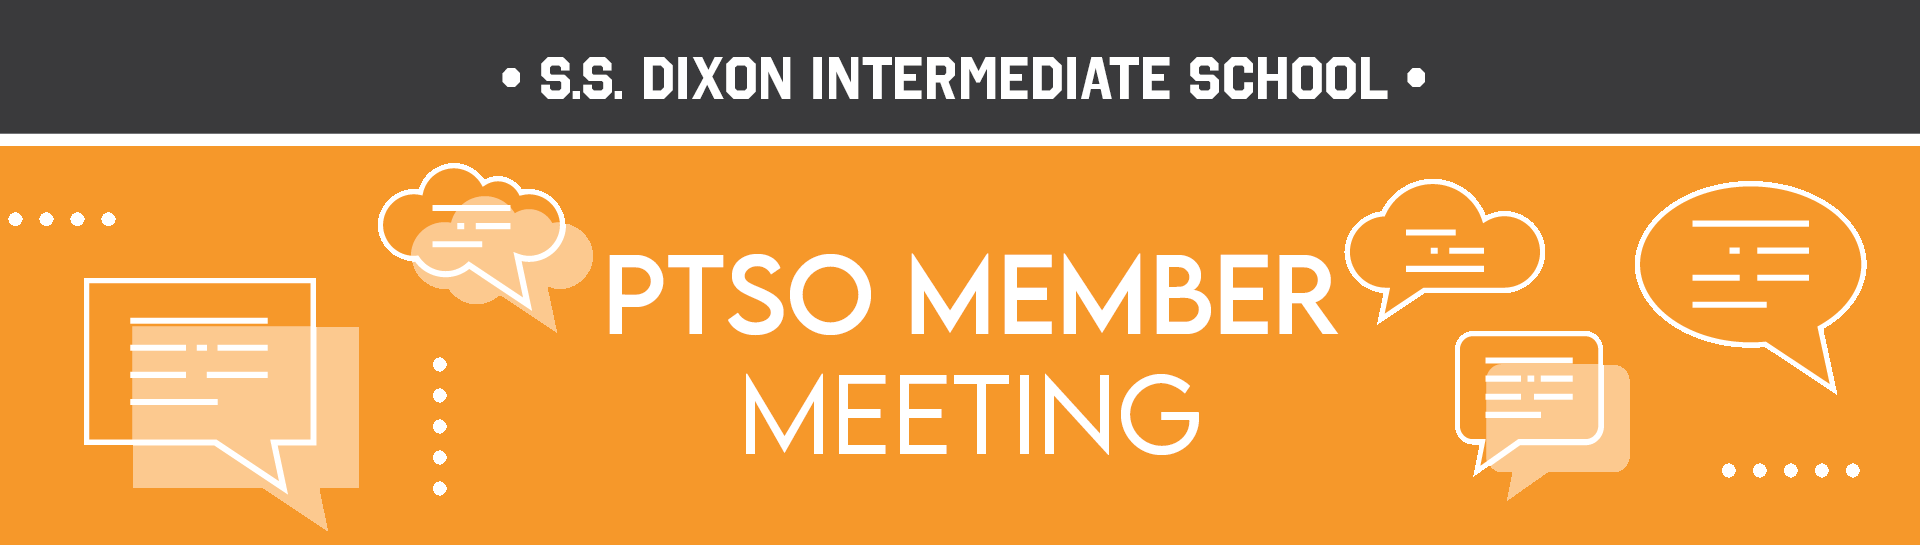 PTSO Member Meeting Banner